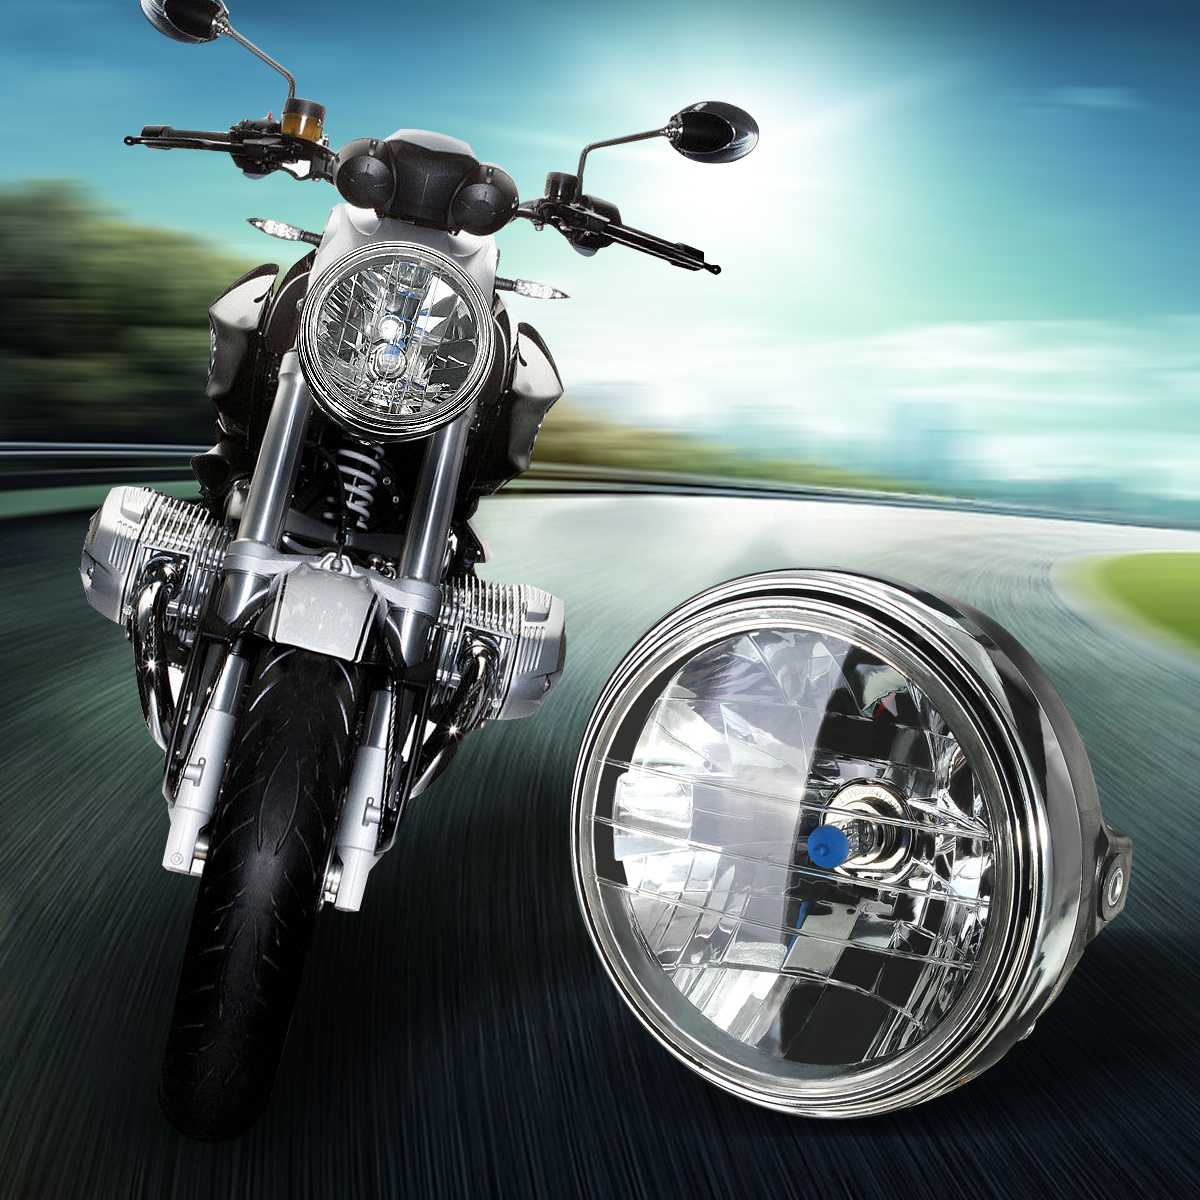 Seneste nyt Garanti Udholde Price history & Review on 7 Inch 35W Motorcycle Headlight Round H4 LED Head  Lamp for Honda/Kawasaki/Suzuki/Yamaha | AliExpress Seller - Motorwood Store  | Alitools.io